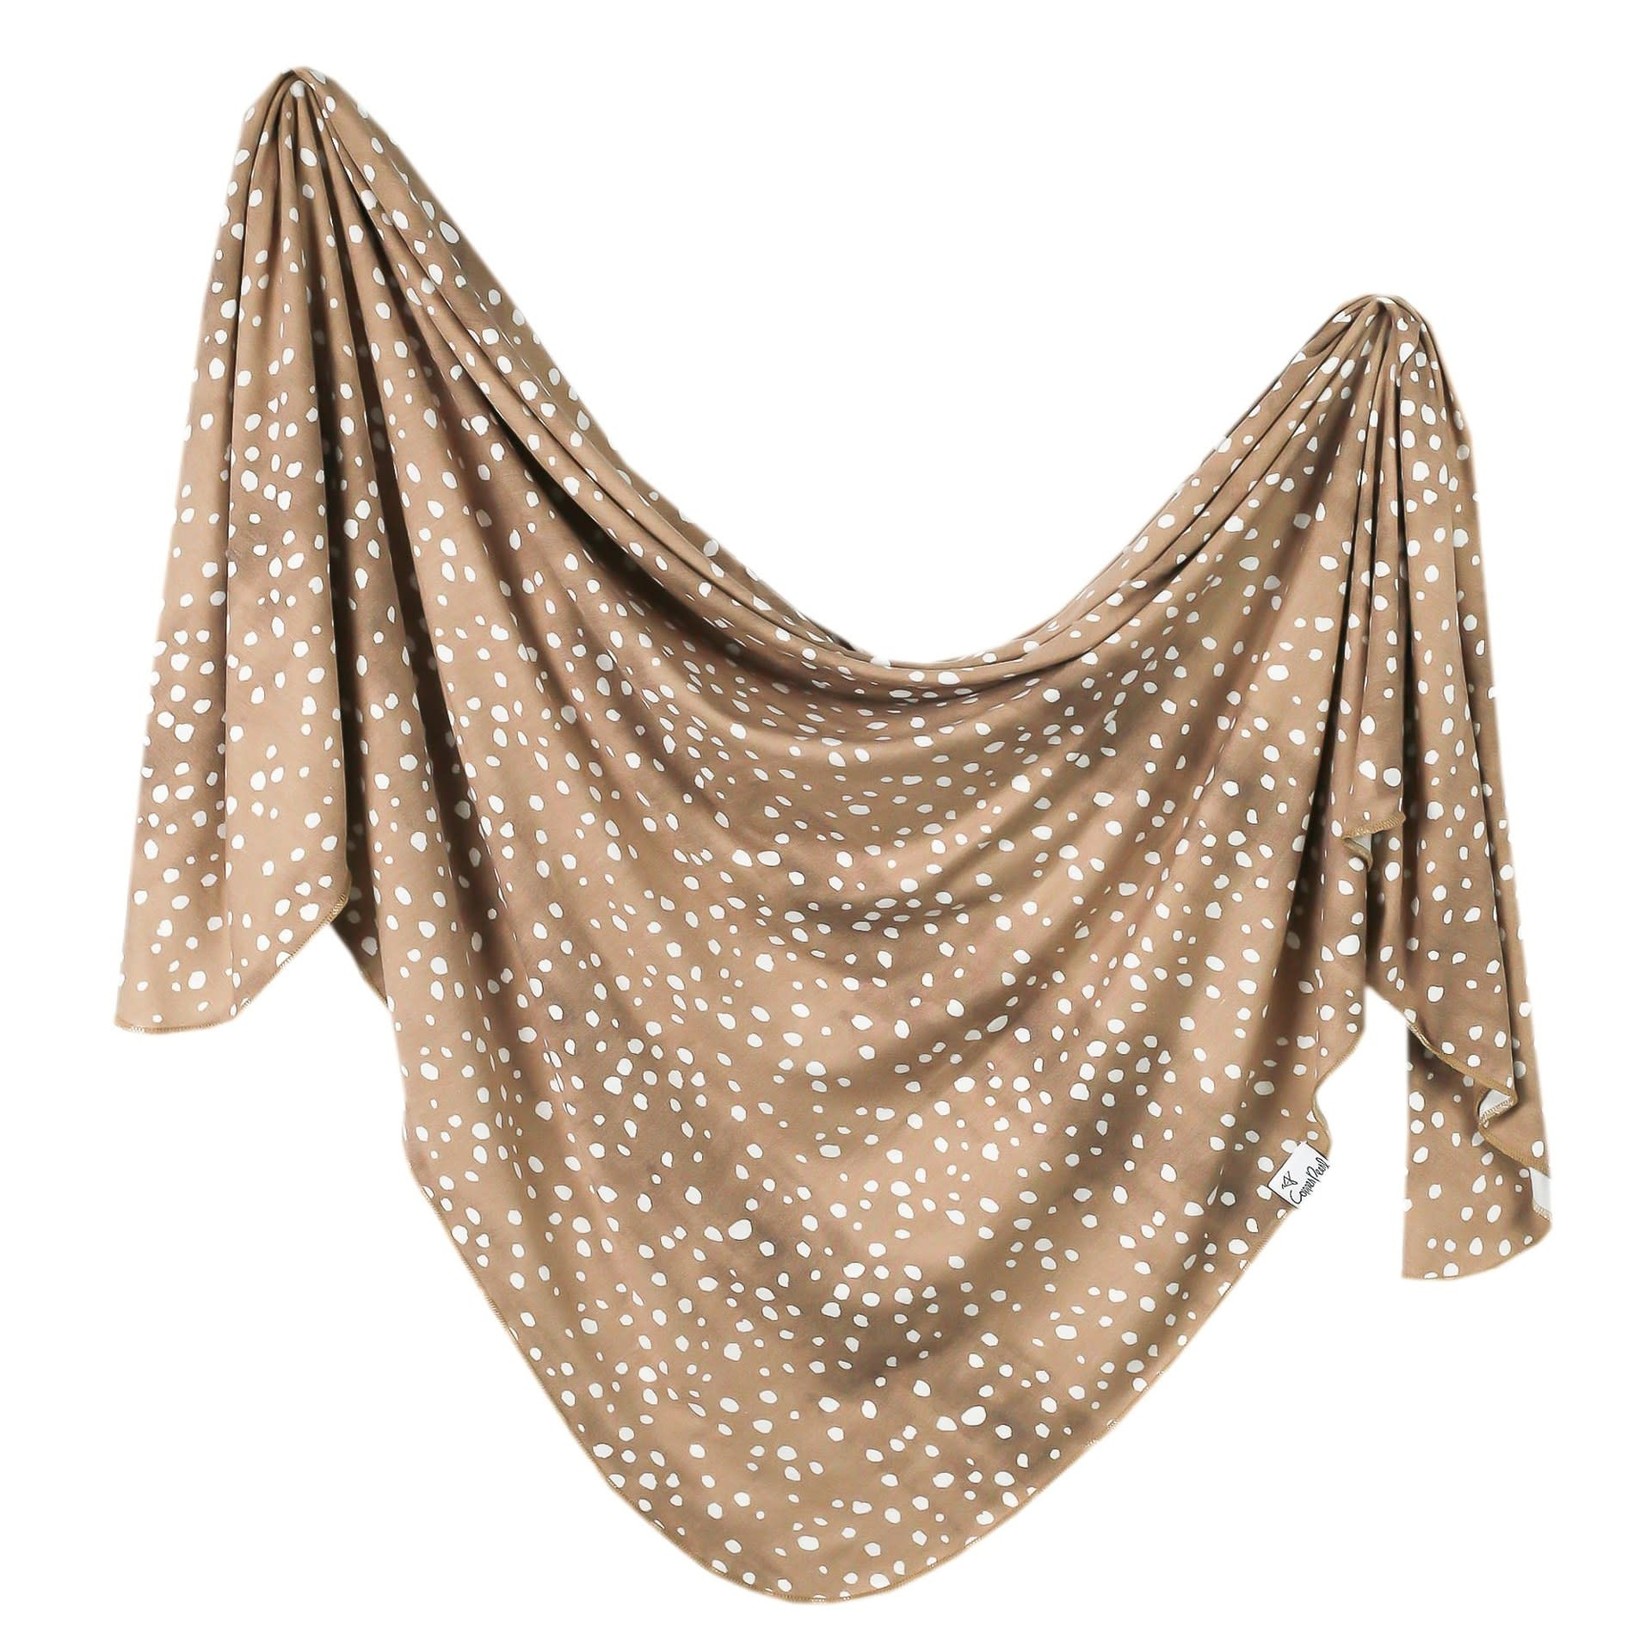 Copper Pearl Knit Blanket - Fawn